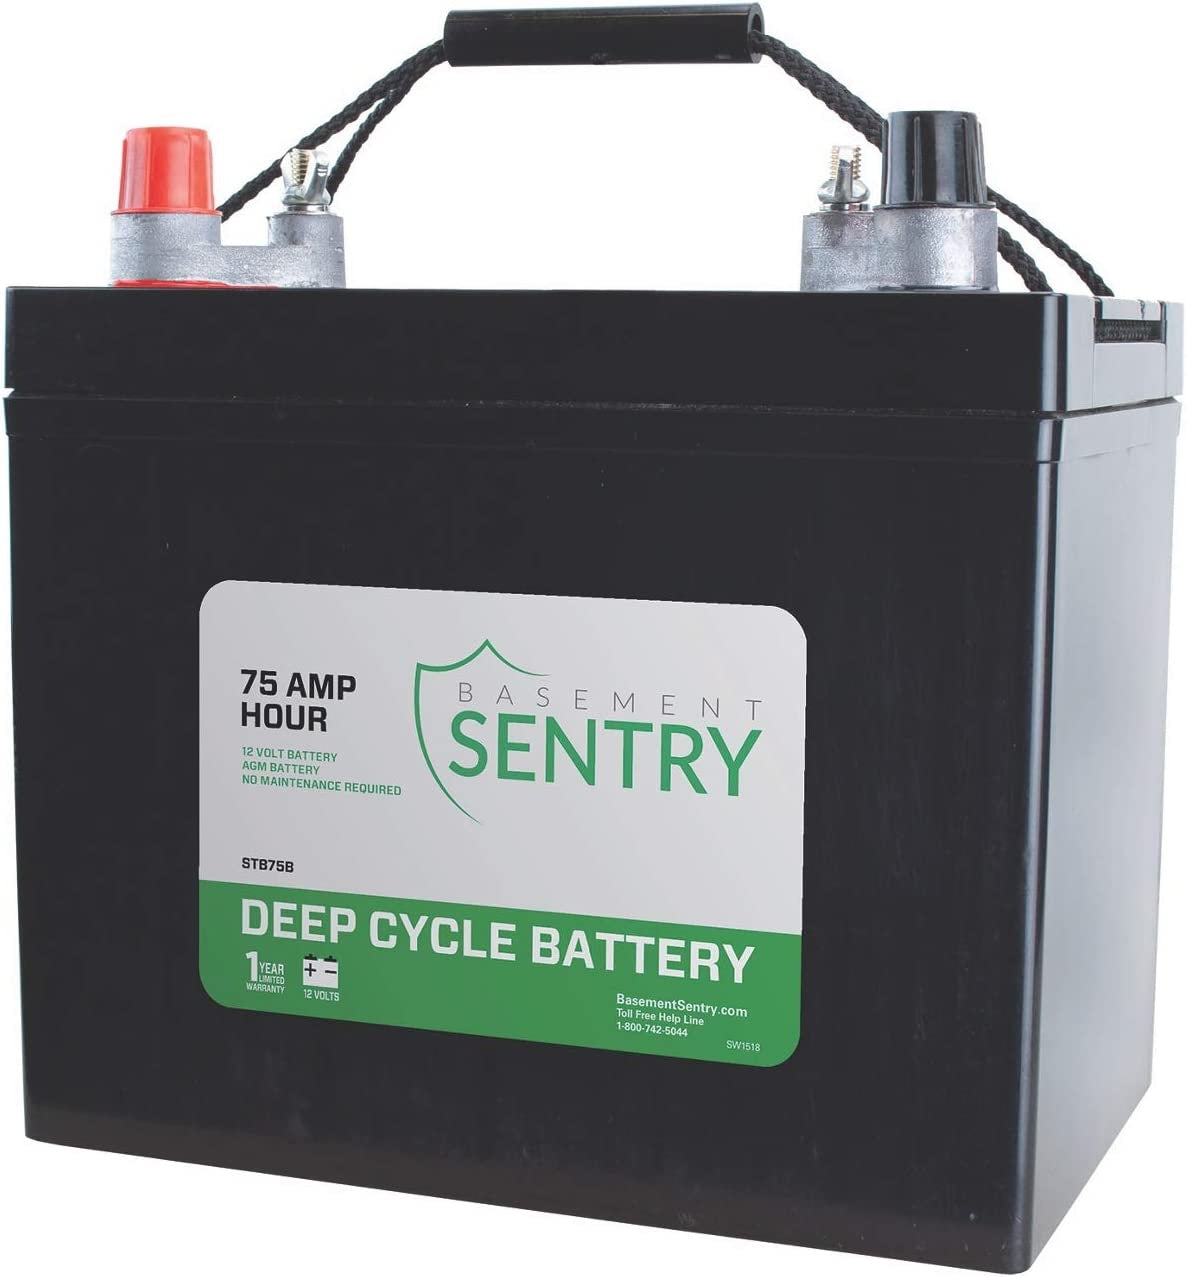 Basement Sentry STB75B Deep Cycle Battery, 75 AMP